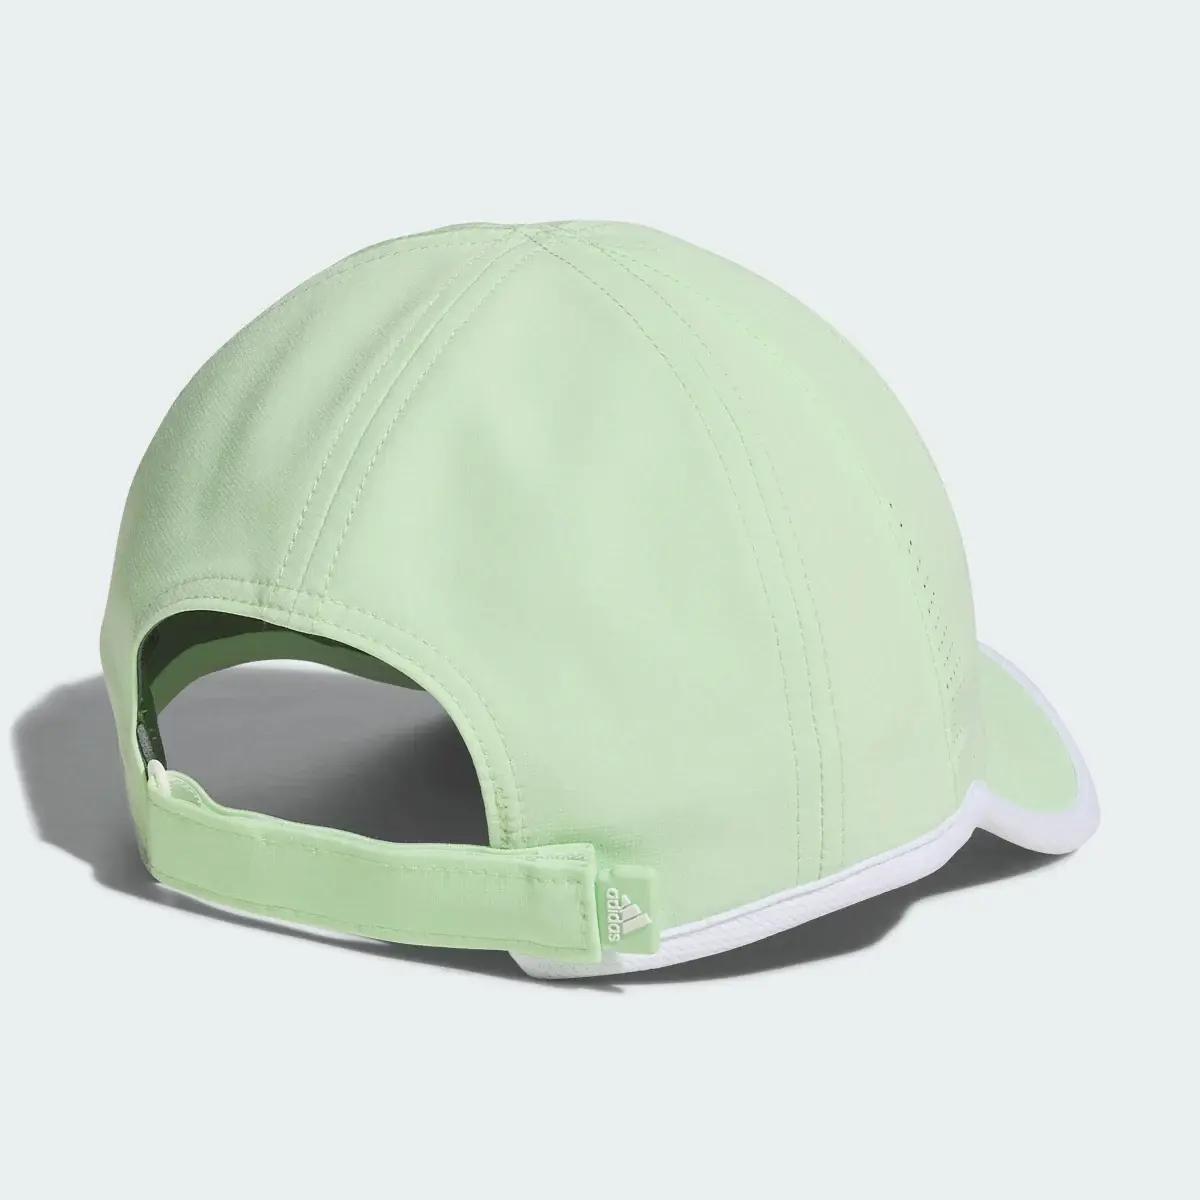 Adidas Superlite Hat. 2